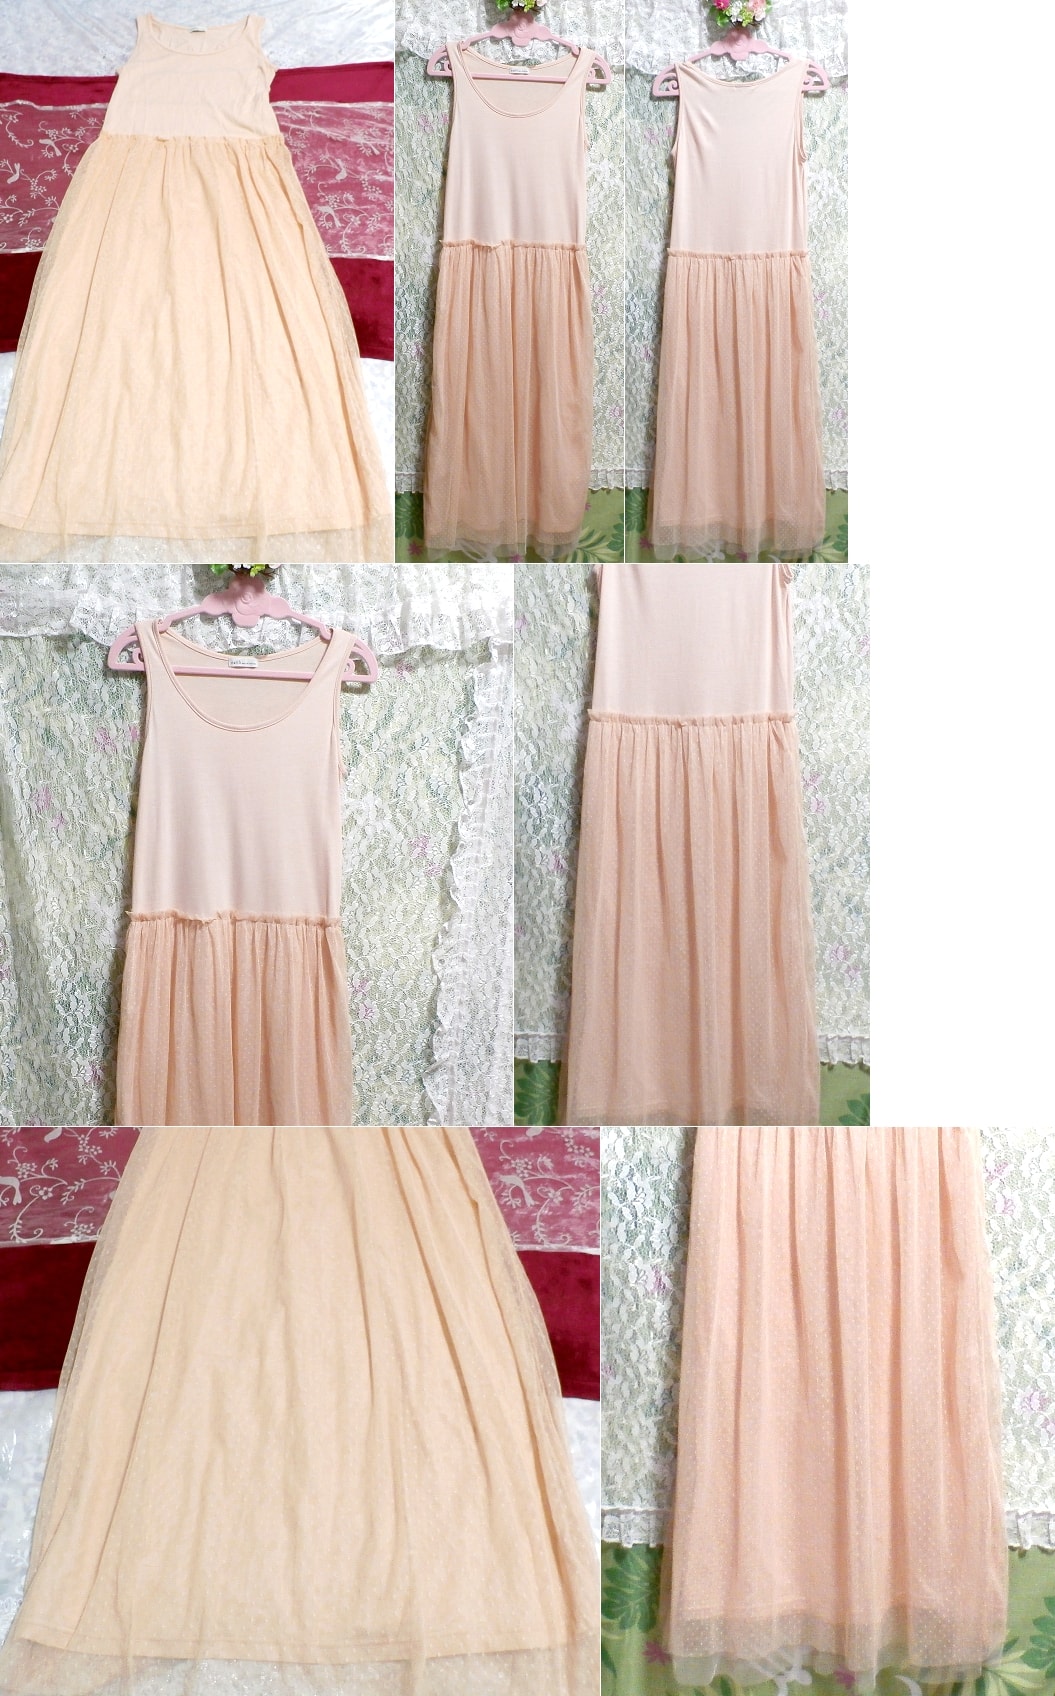 Pink lace sleeveless long skirt negligee nightgown maxi dress, long skirt, m size